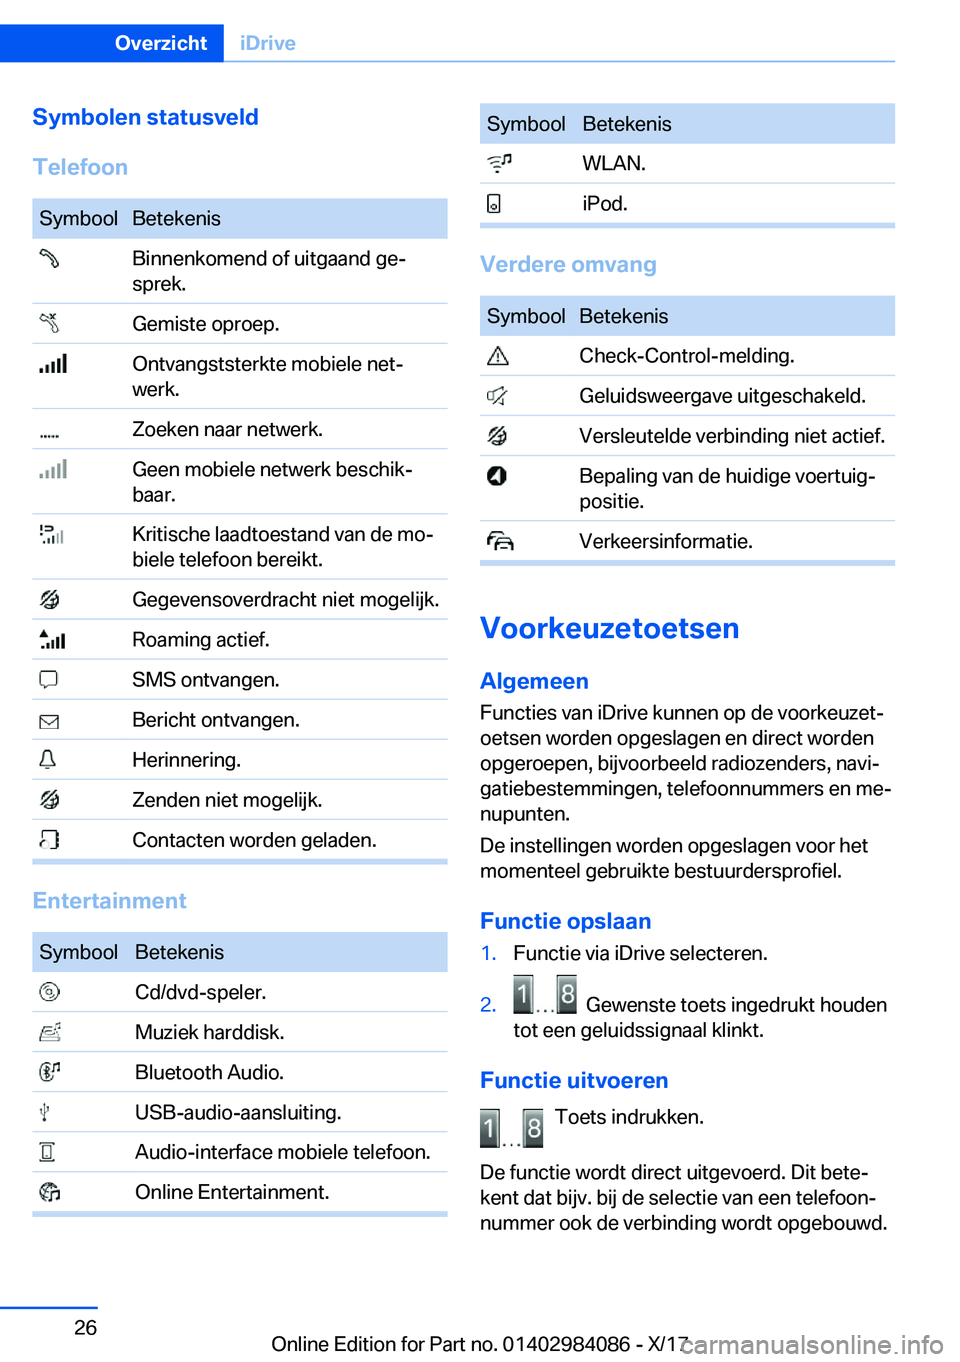 BMW 3 SERIES 2018  Instructieboekjes (in Dutch) �S�y�m�b�o�l�e�n��s�t�a�t�u�s�v�e�l�d
�T�e�l�e�f�o�o�n�S�y�m�b�o�o�l�B�e�t�e�k�e�n�i�s� �B�i�n�n�e�n�k�o�m�e�n�d� �o�f� �u�i�t�g�a�a�n�d� �g�ej
�s�p�r�e�k�.� �G�e�m�i�s�t�e� �o�p�r�o�e�p�.� �O�n�t�v